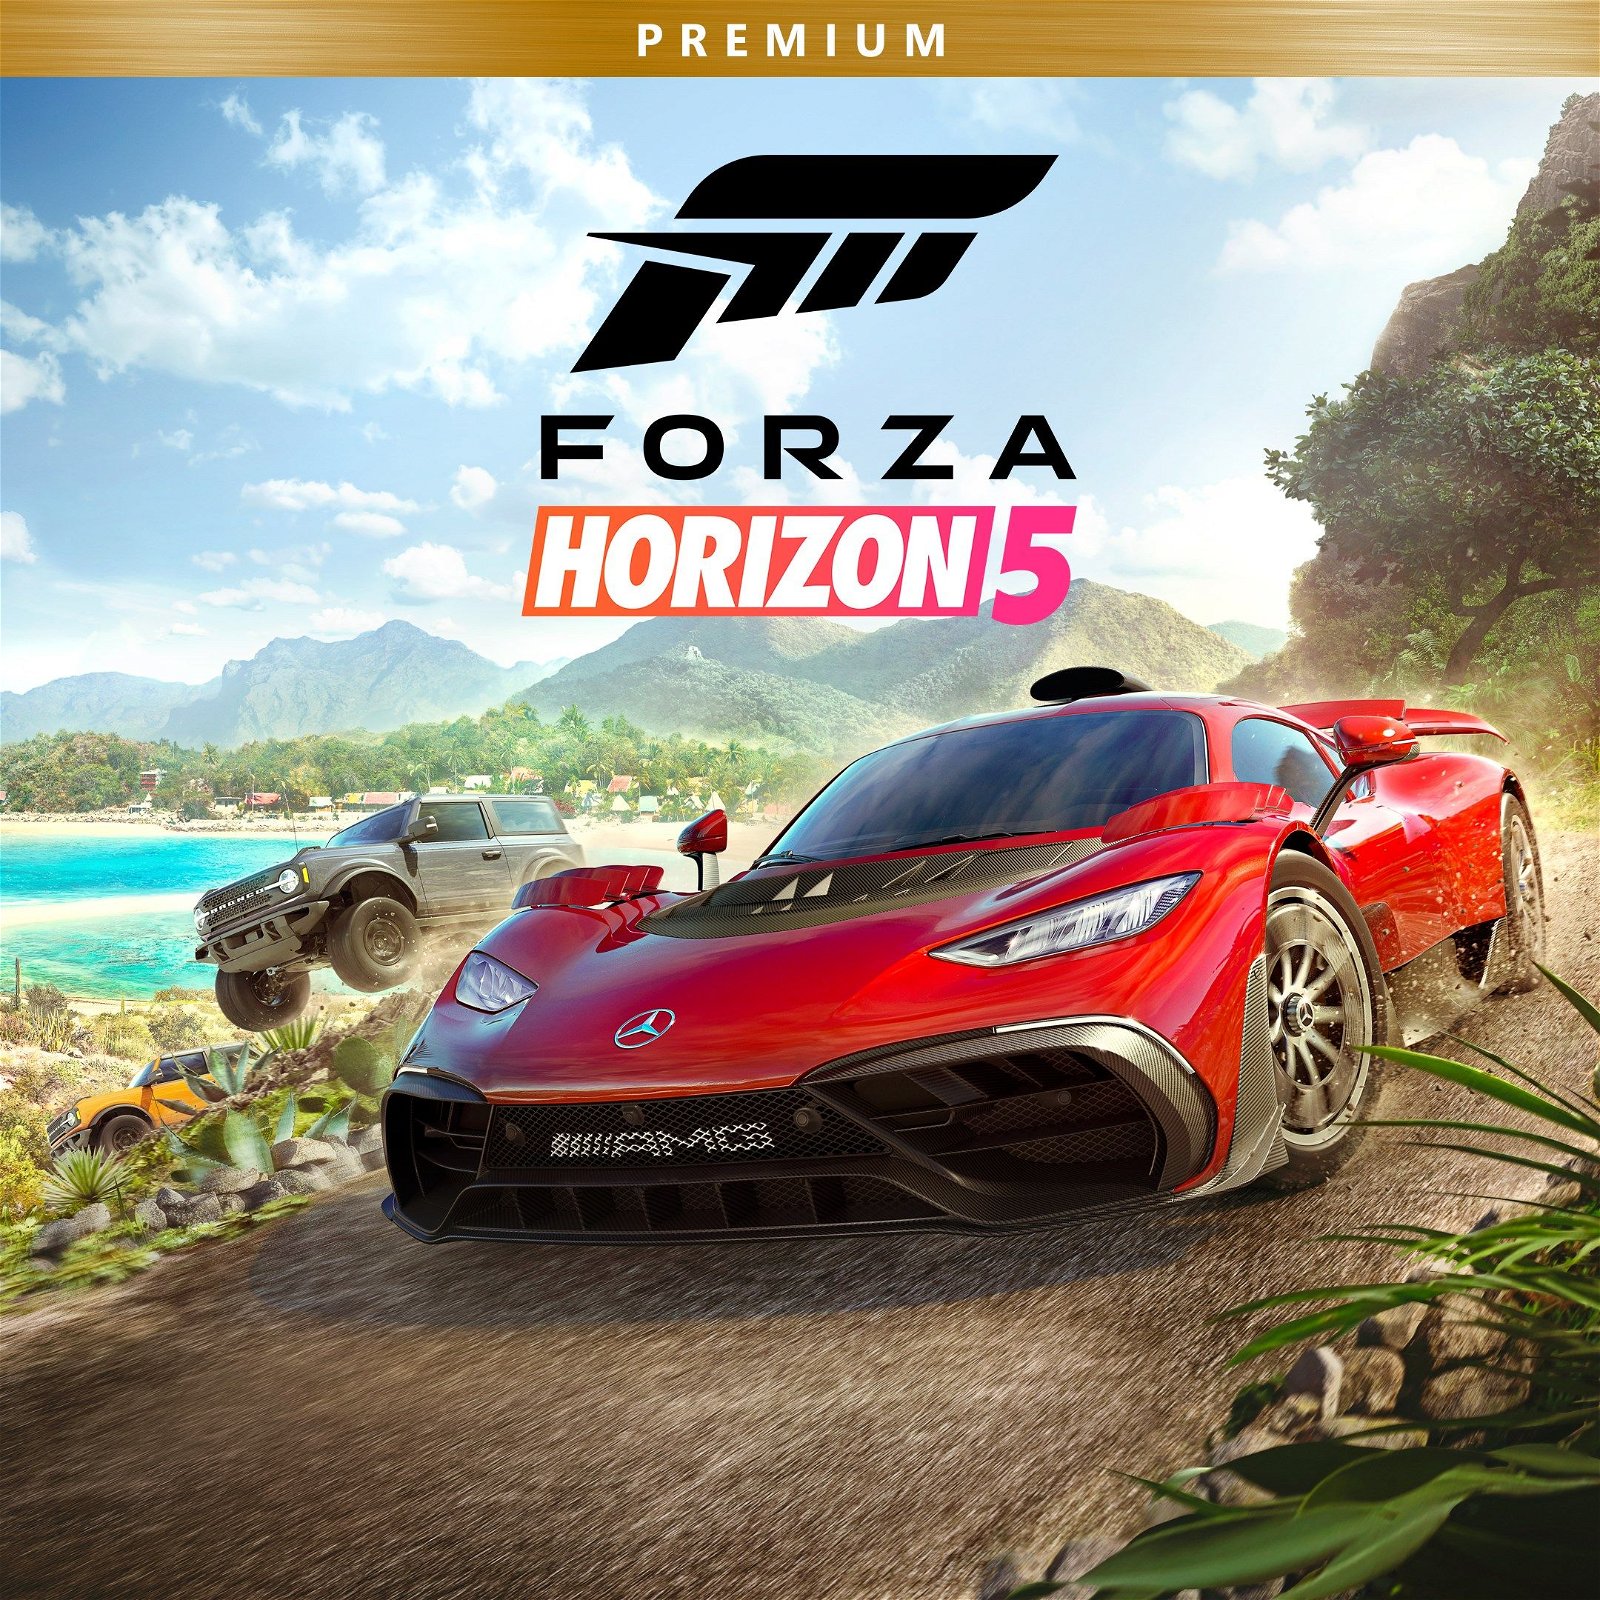 Image of Forza Horizon 5 Premium Edition